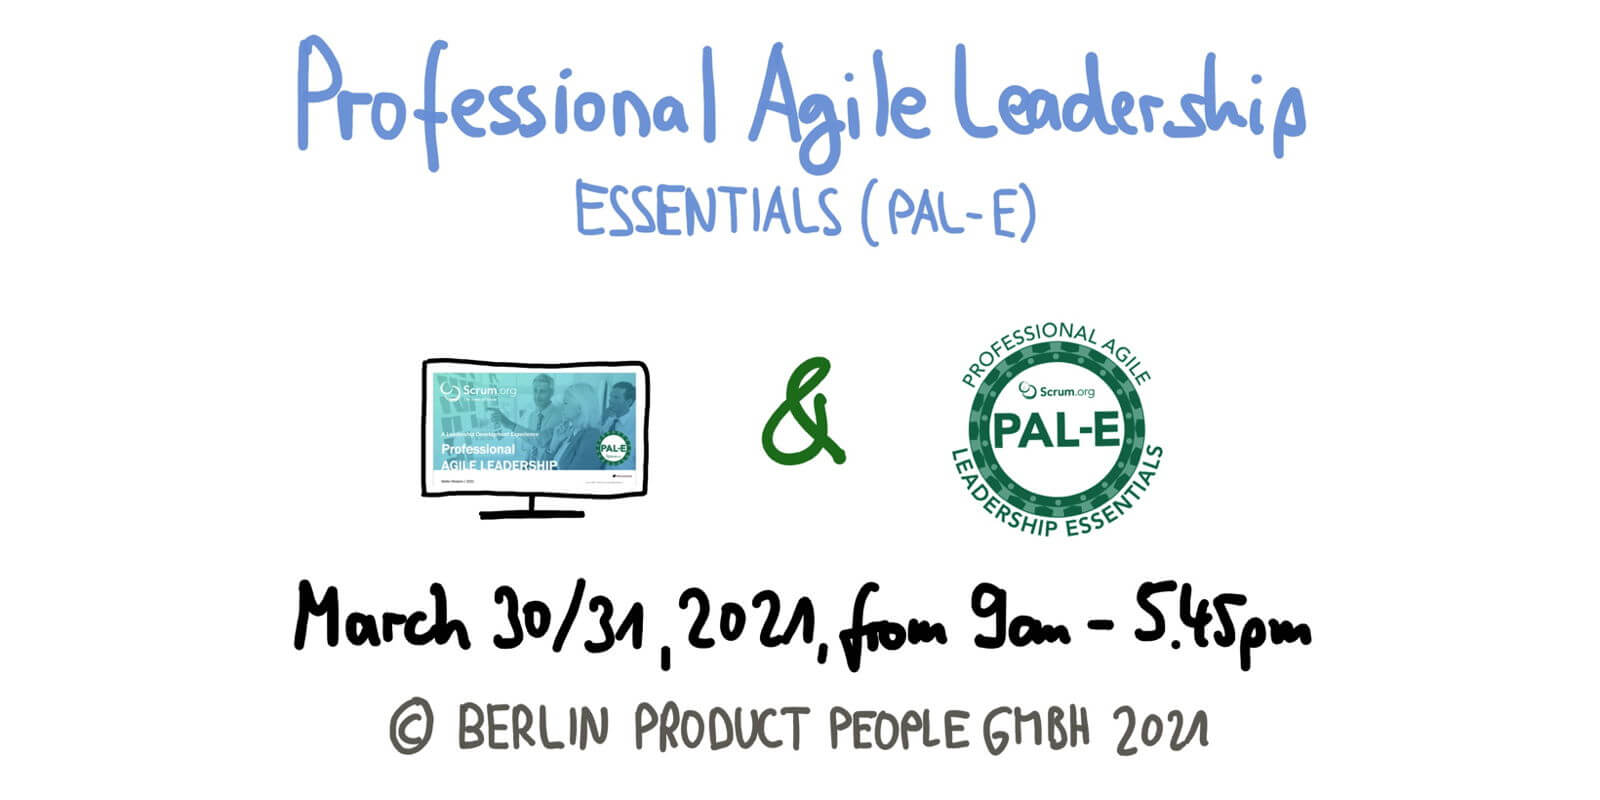 Professional Agile Leadership Essentials Training w/ PAL-E Certificate — March 30-31, 2021